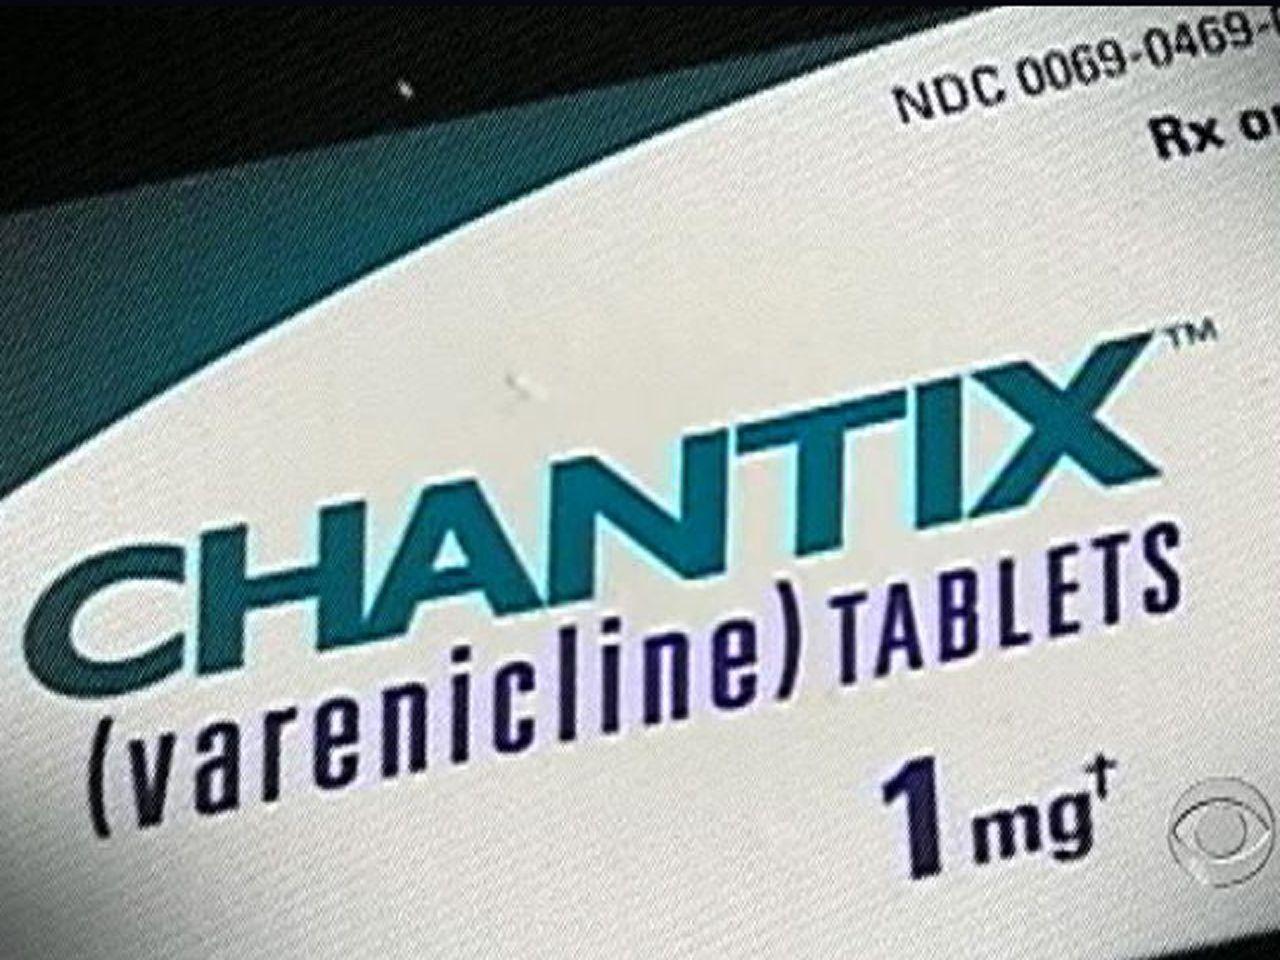 Chantix Logo - New FDA warning for anti-smoking drug Chantix (varenicline) - CBS News